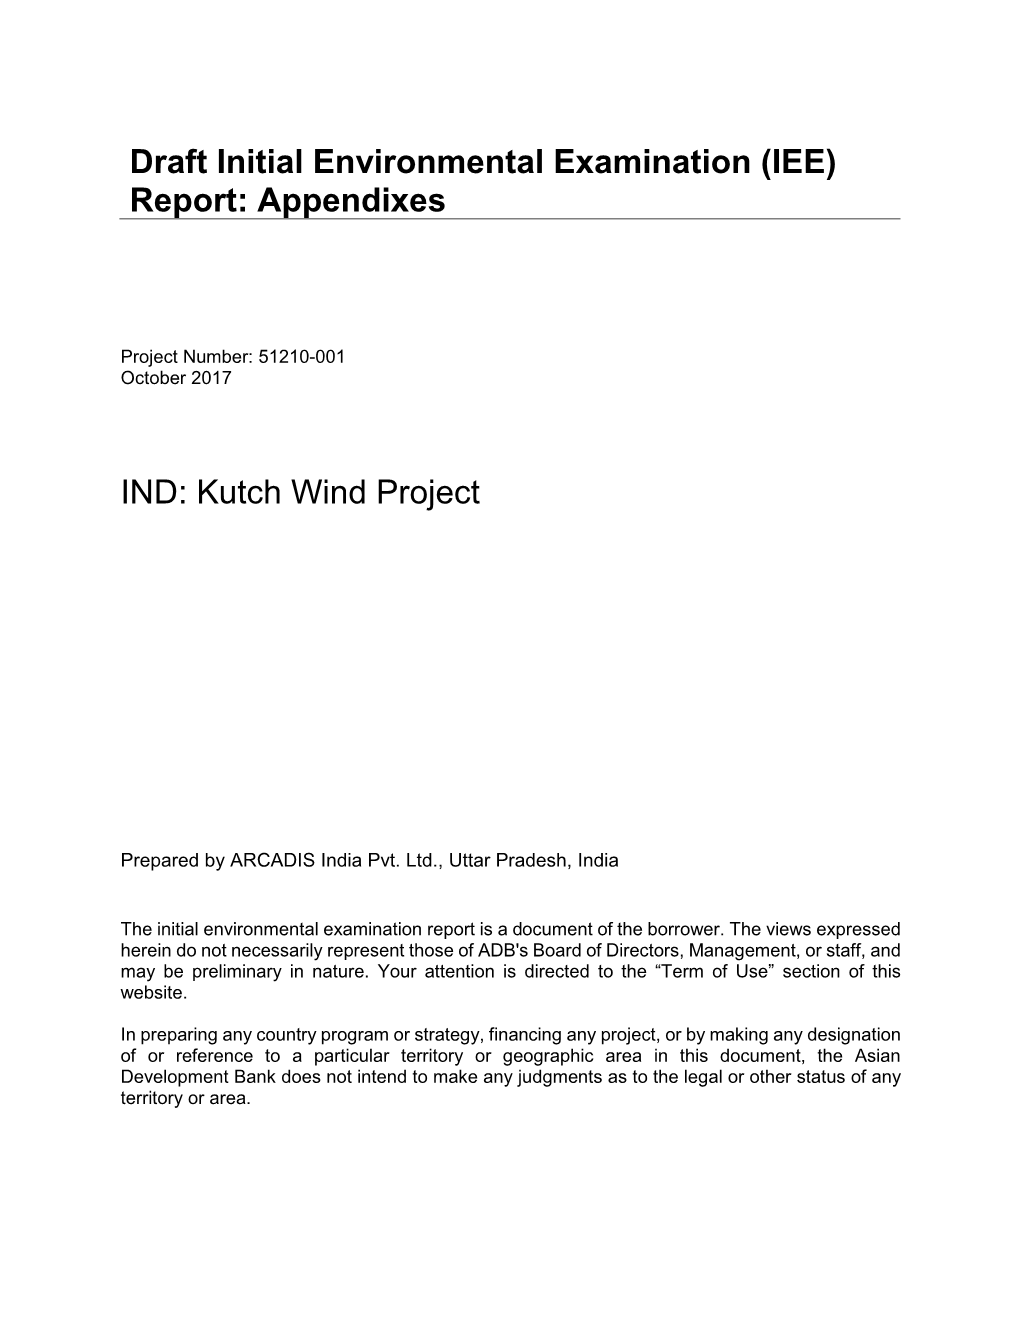 Kutch Wind Project